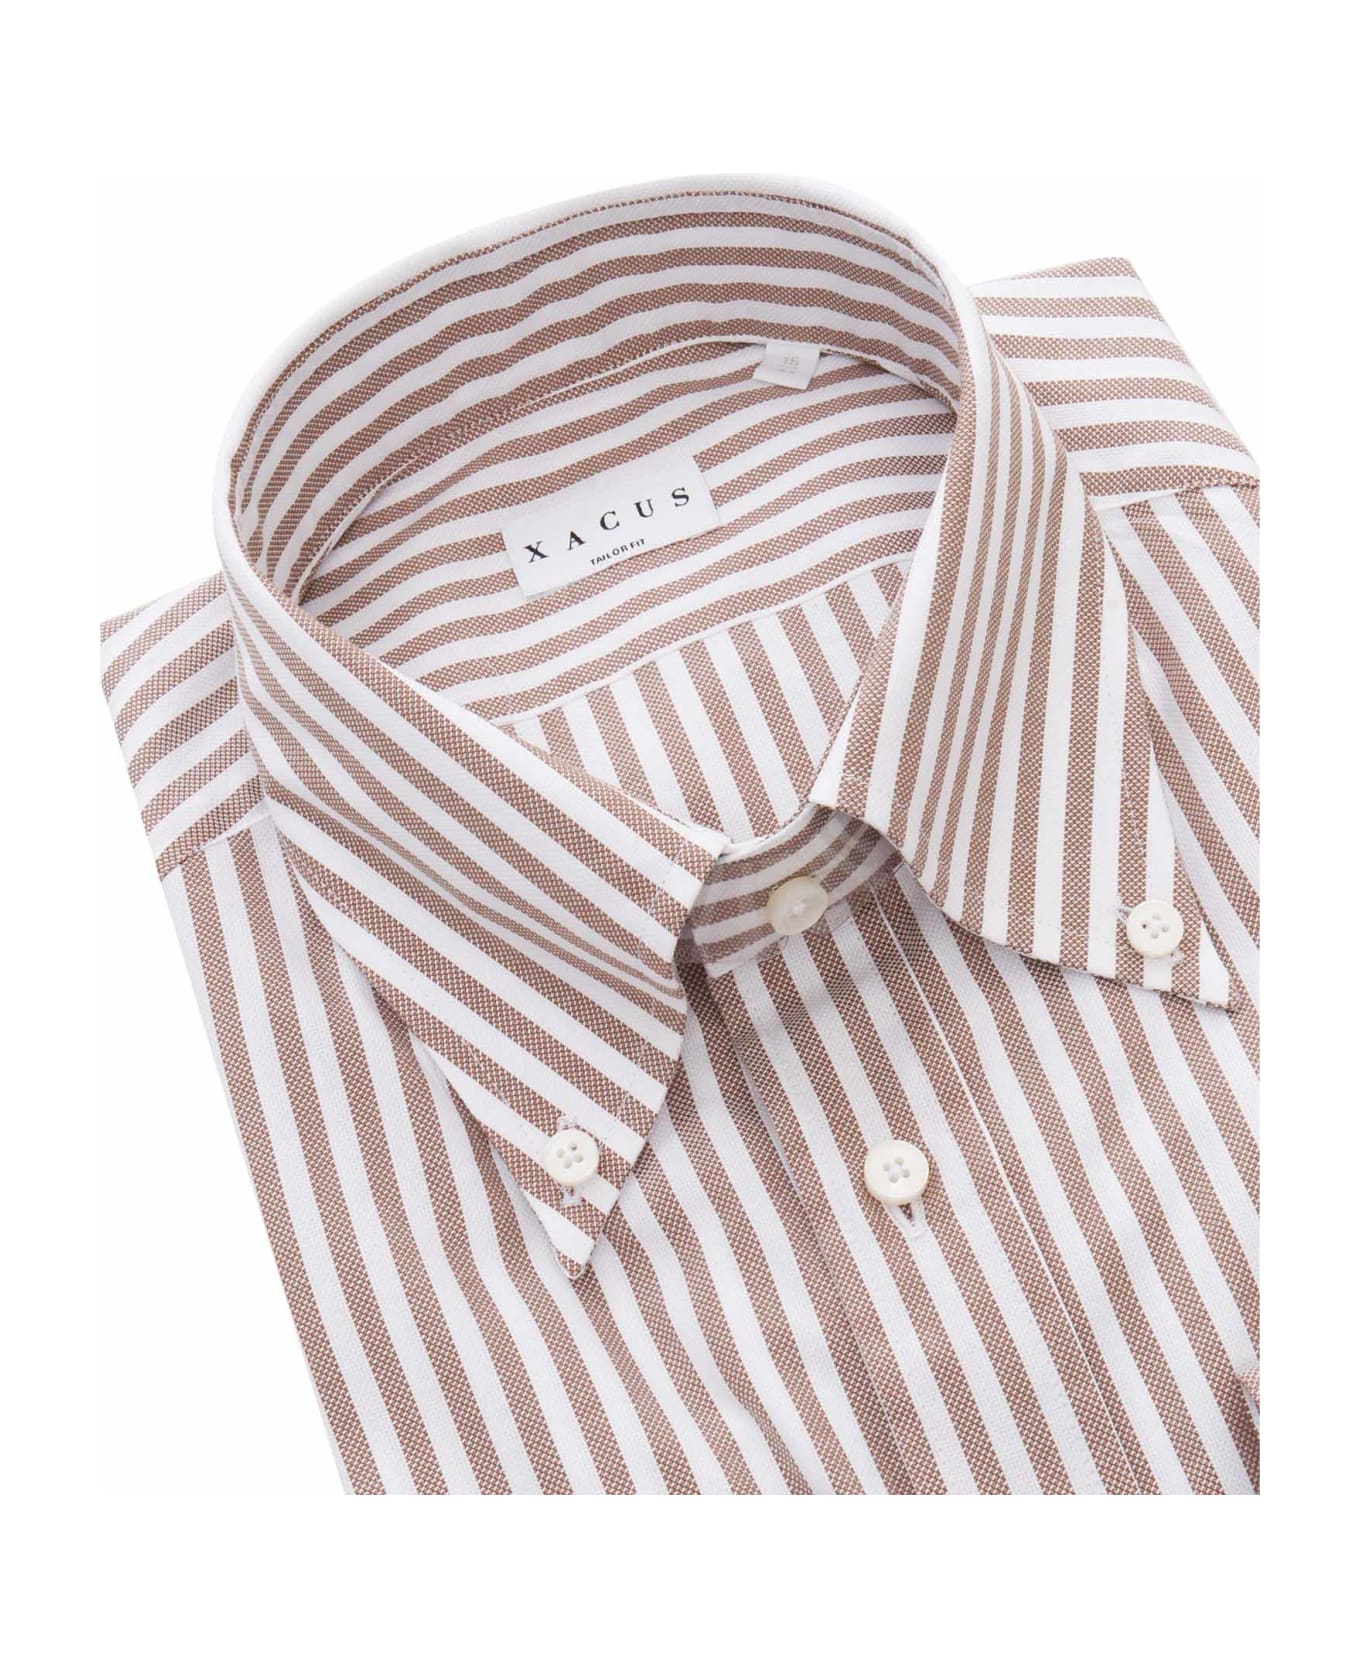 Xacus Brown Striped Cotton Shirt - MULTICOLOR